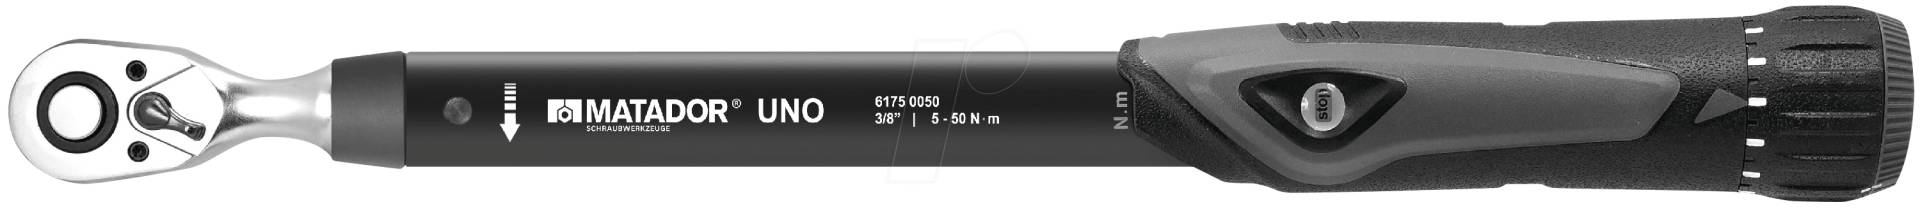 MAT 6175 0050 - Drehmomentschlüssel, 10-50 Nm, 3/8´´, Uno von Matador